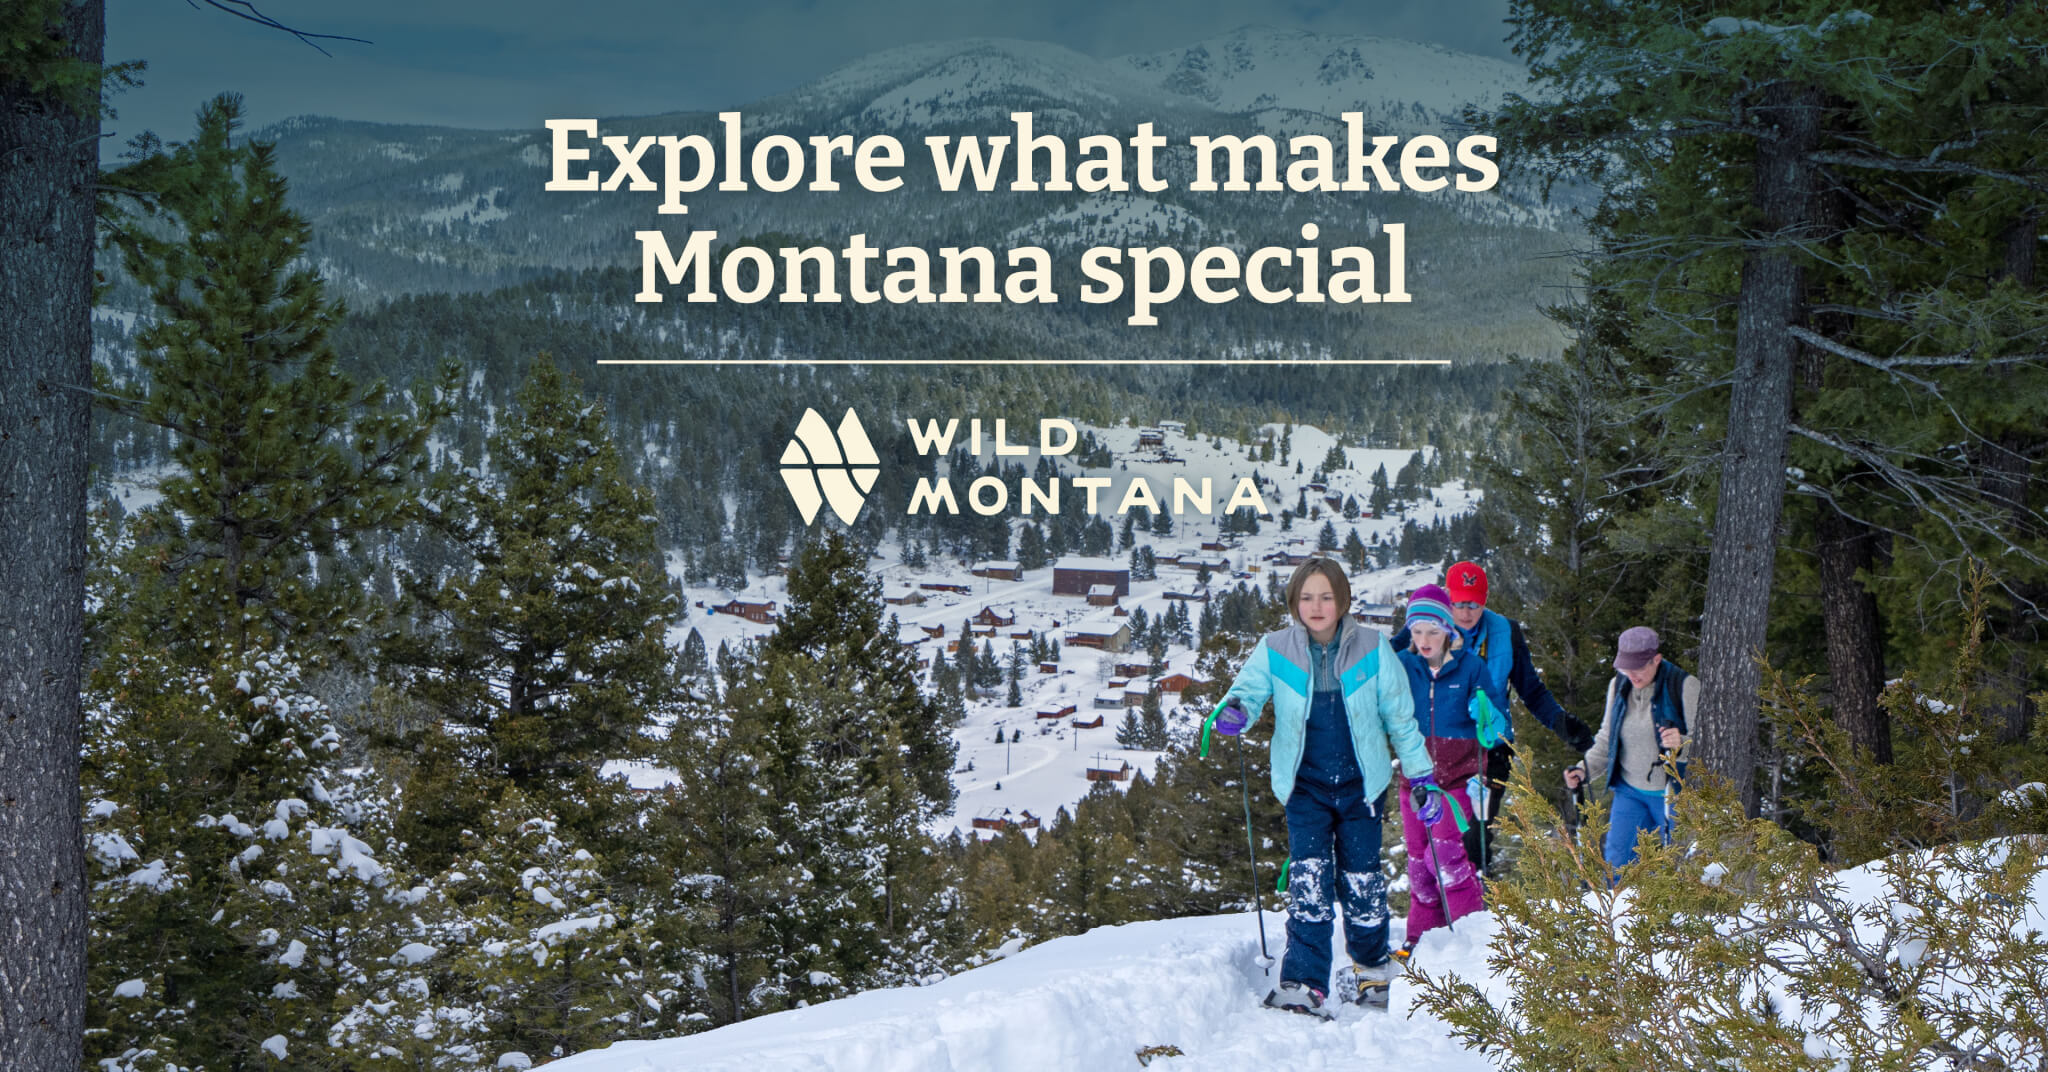 Southwest Montana – Wild Montana